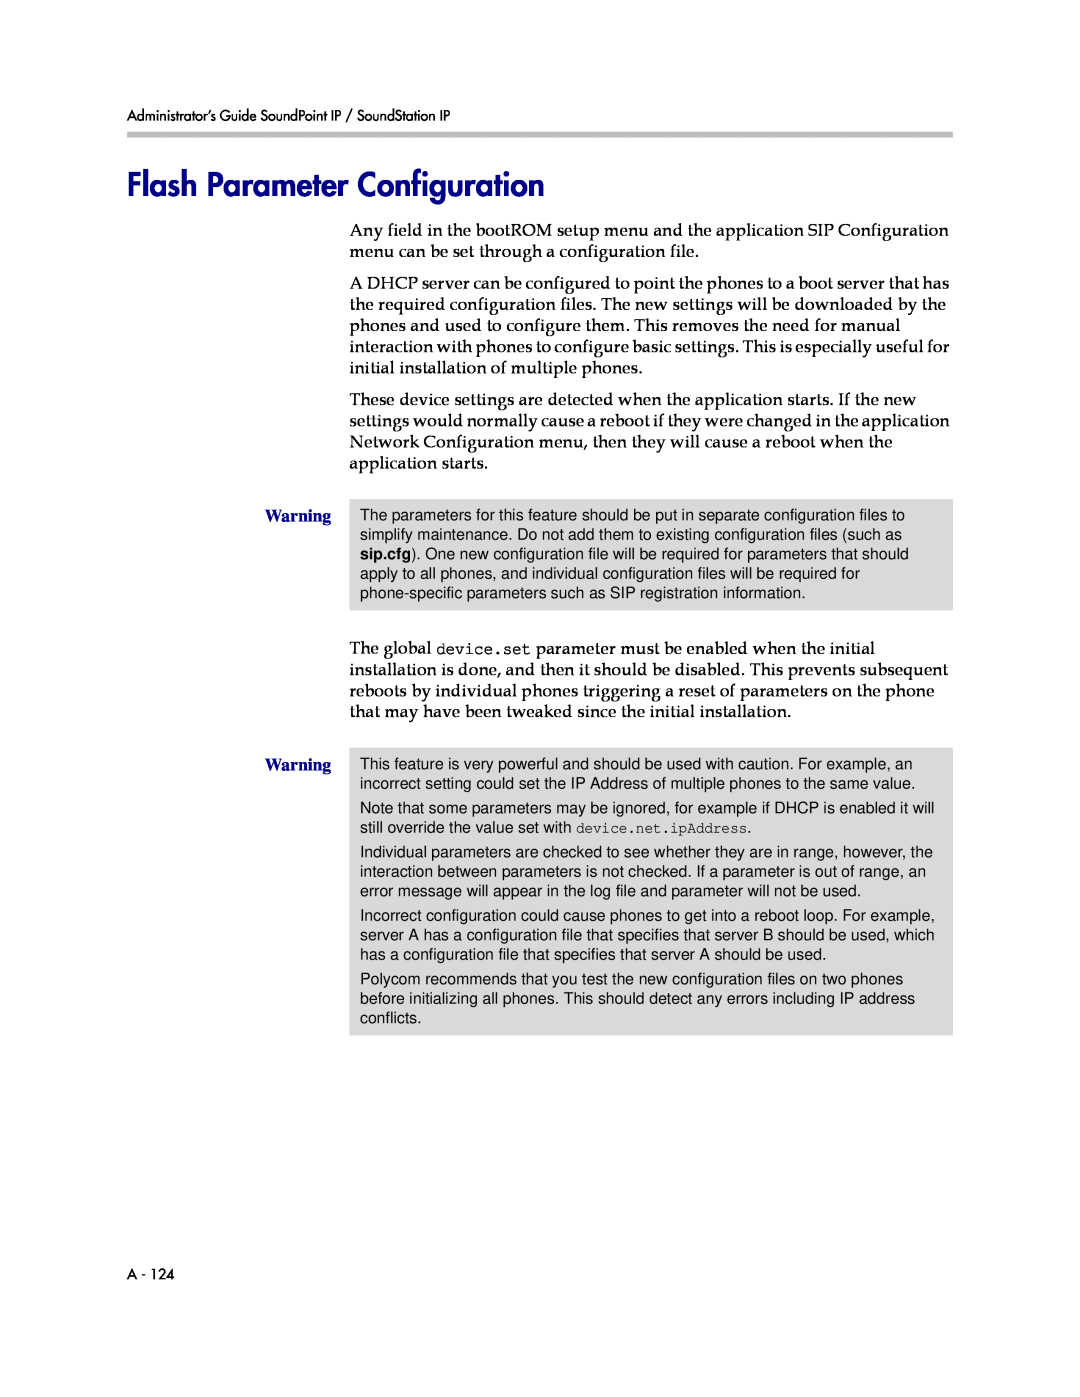 Polycom SIP 3.1 manual Flash Parameter Configuration 